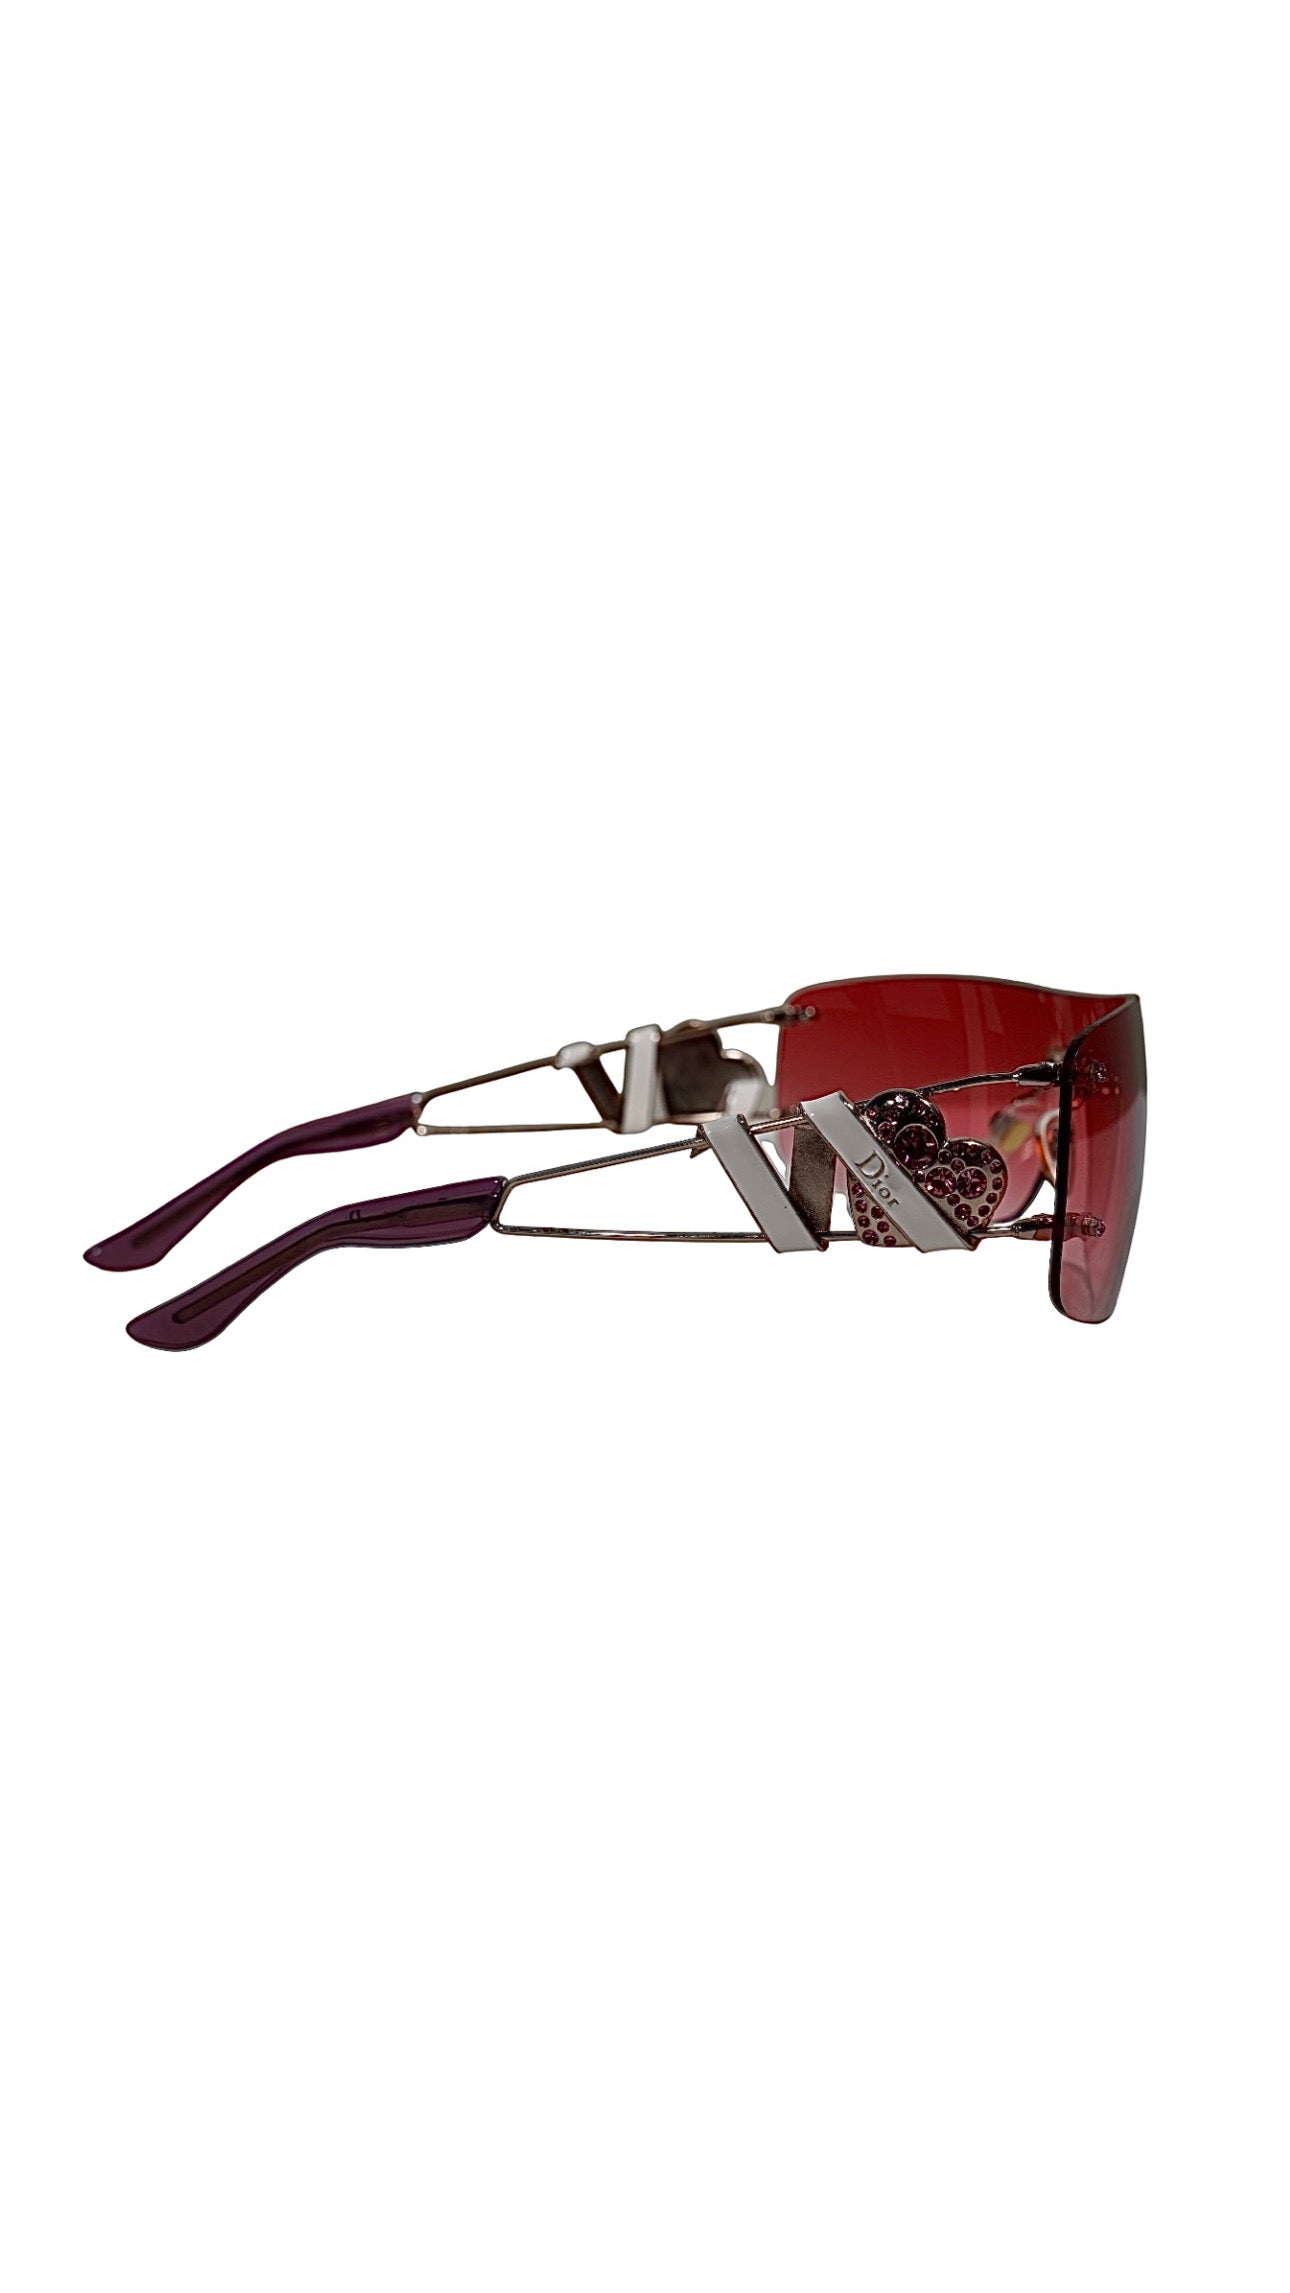 Dior by John Galliano SS 2004 Sunglasses